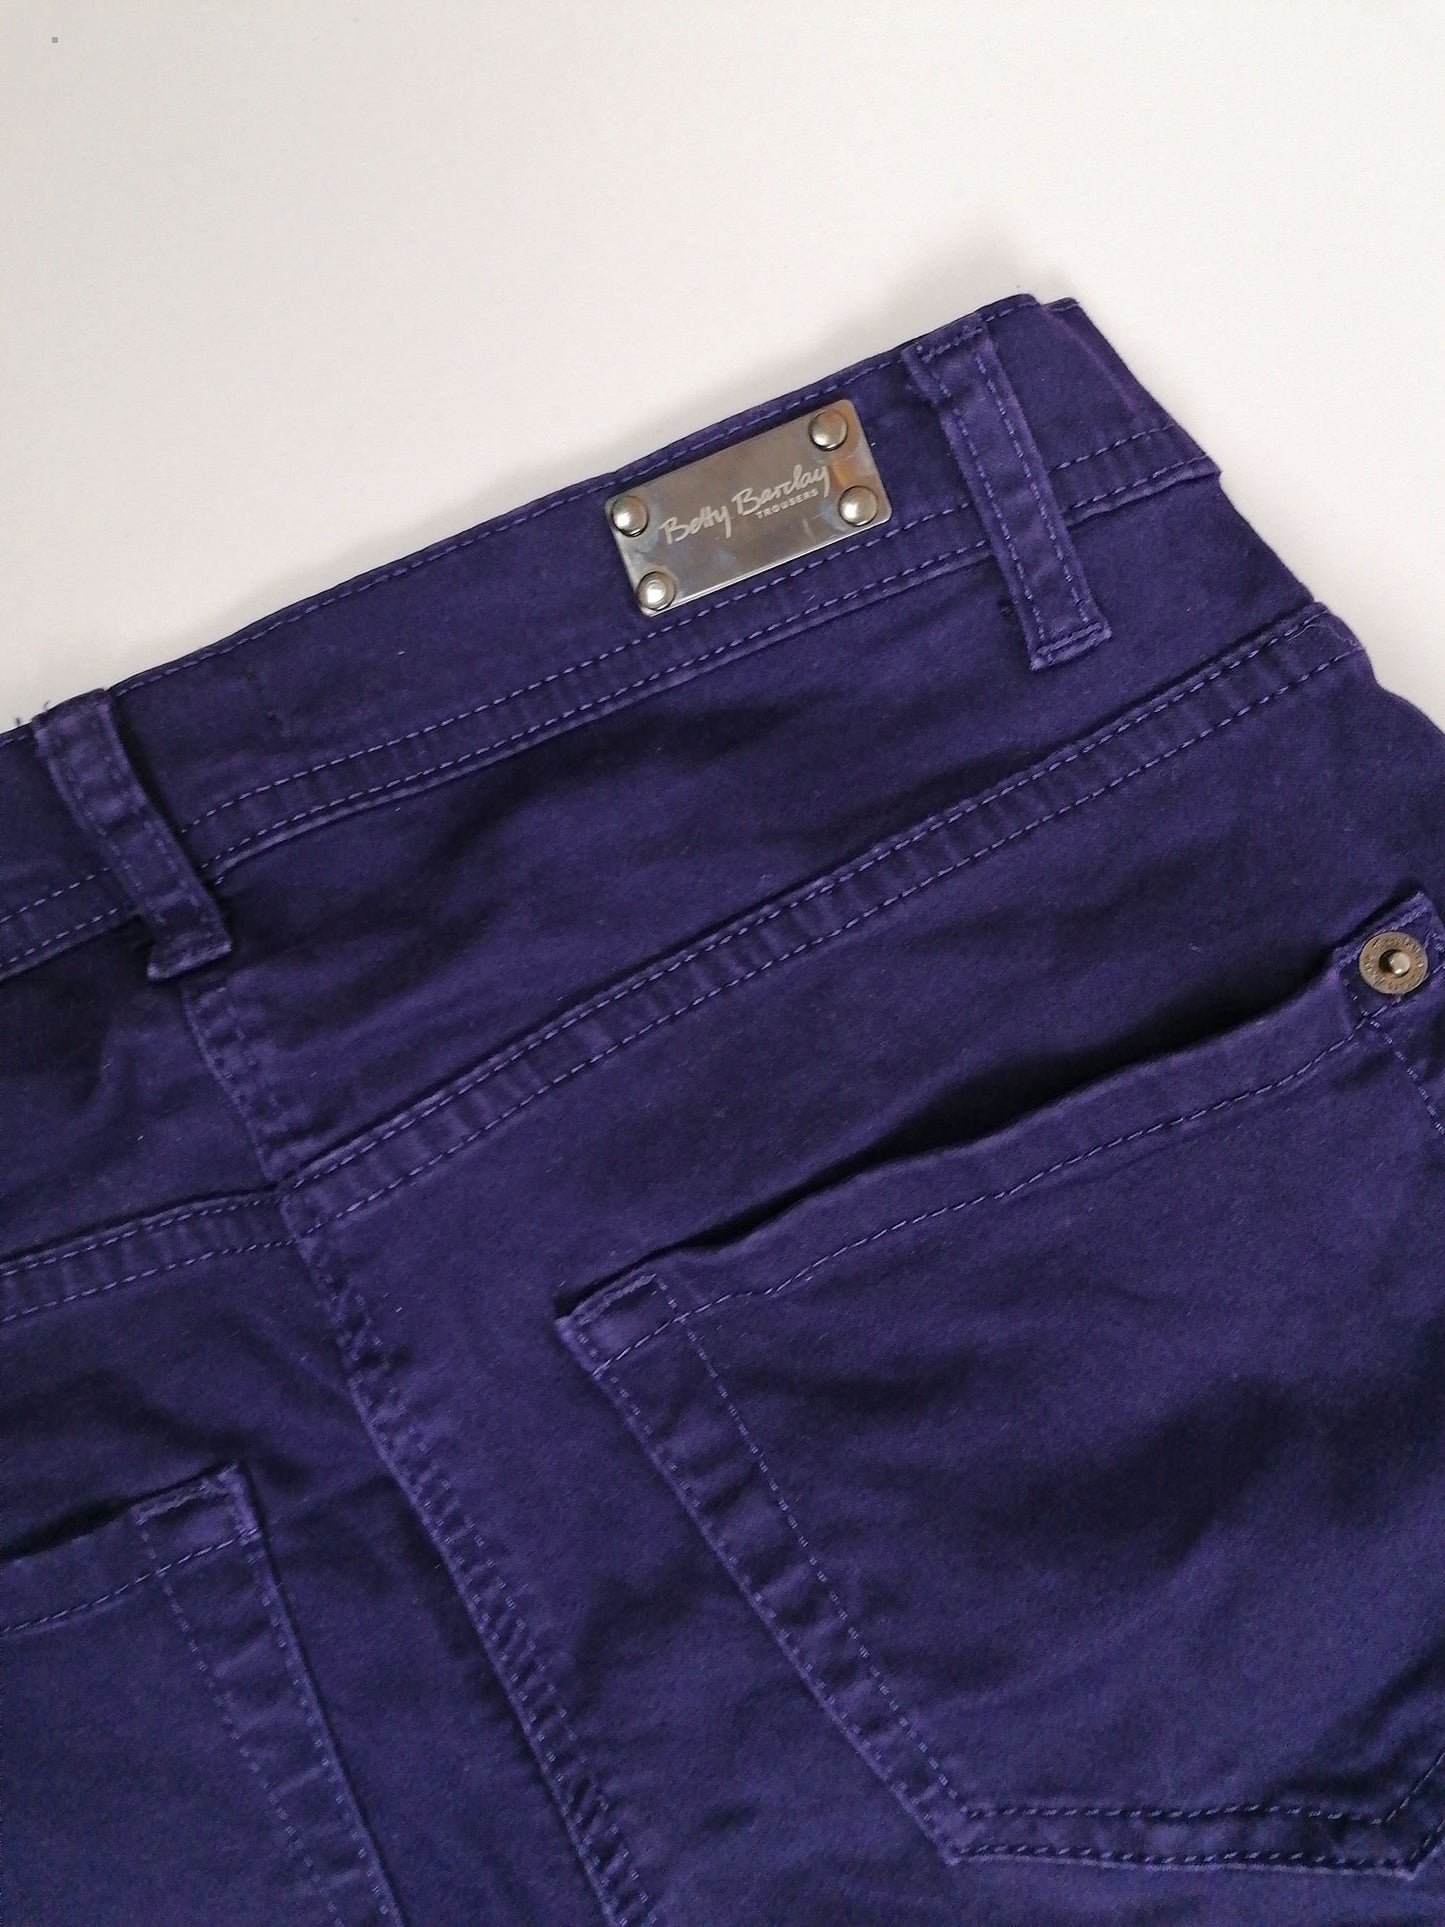 BETTY BARCLAY Indigo Purple Jeans - size S // eu 36 // us 6 // uk 10